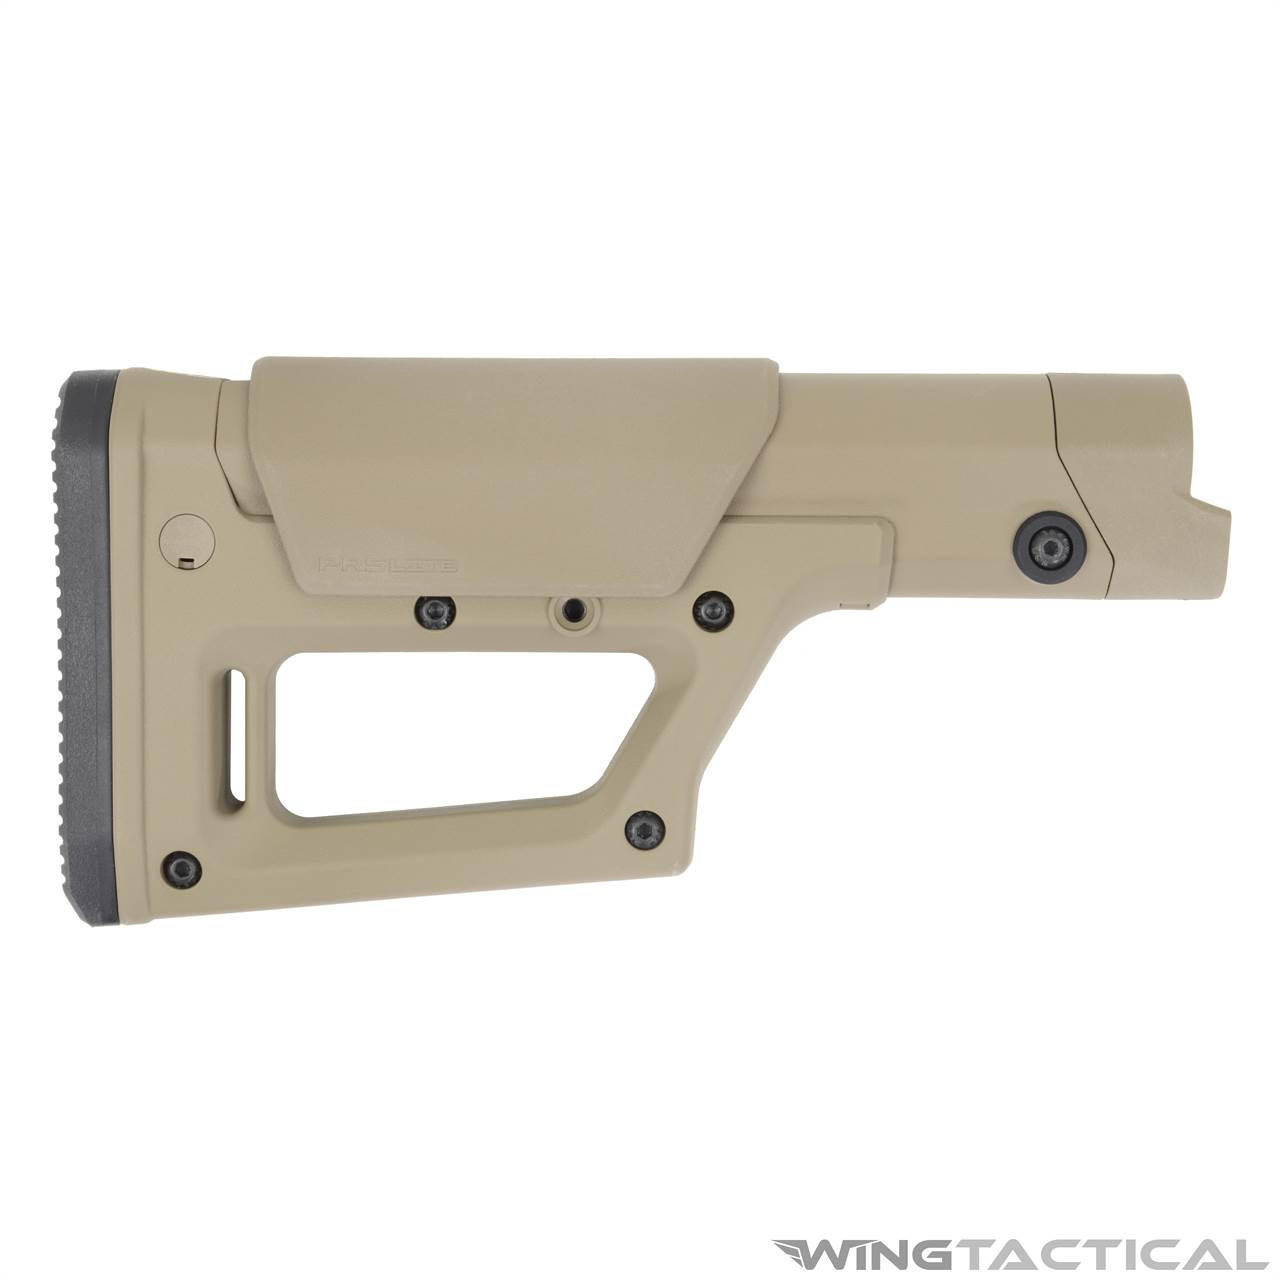 JP Adjustable Reversible Ambi Selector for AR-15 rifles